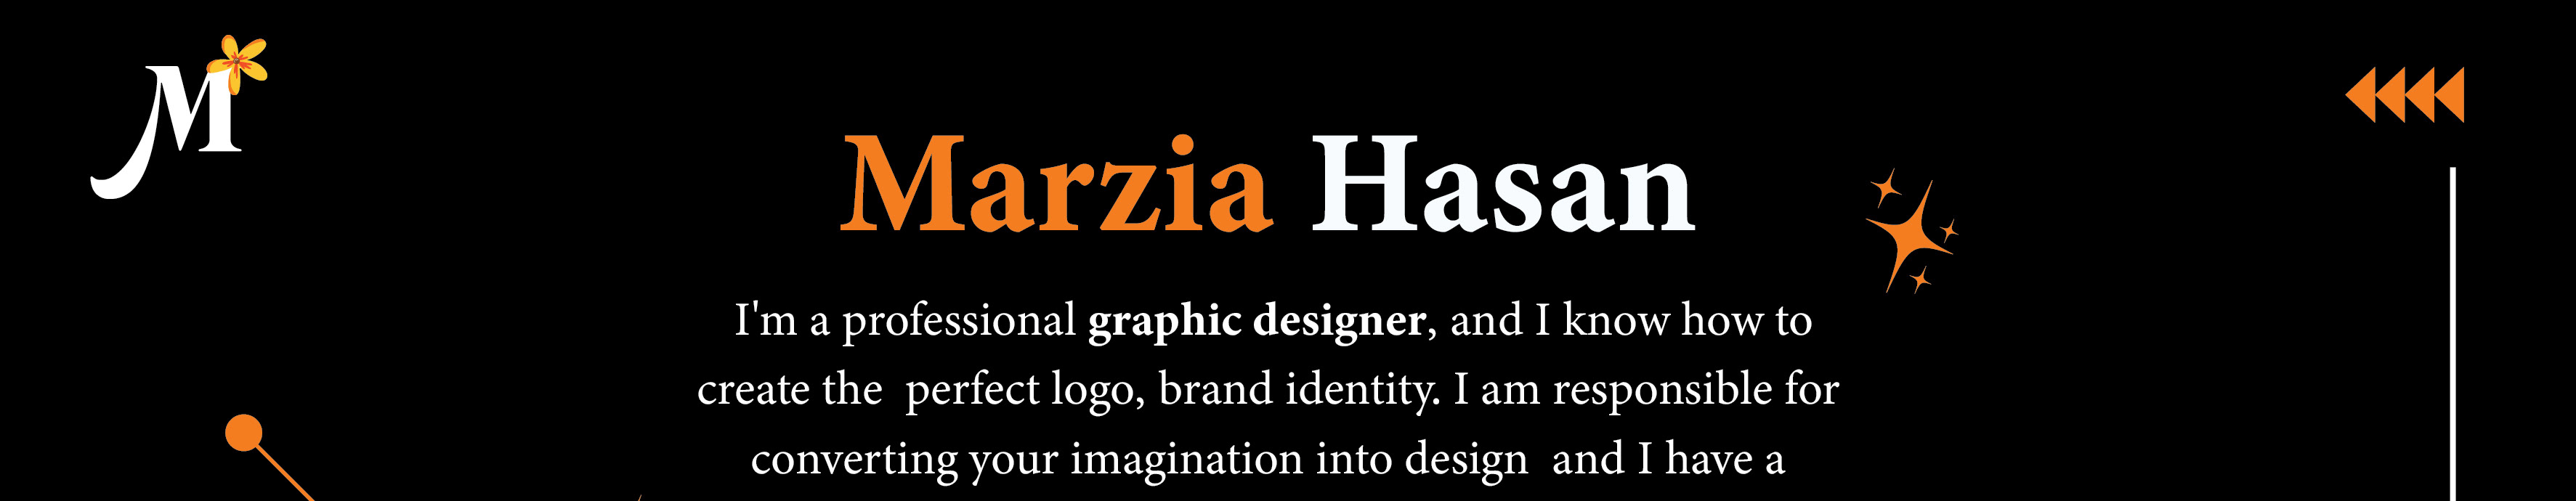 Marzia Hasan's profile banner